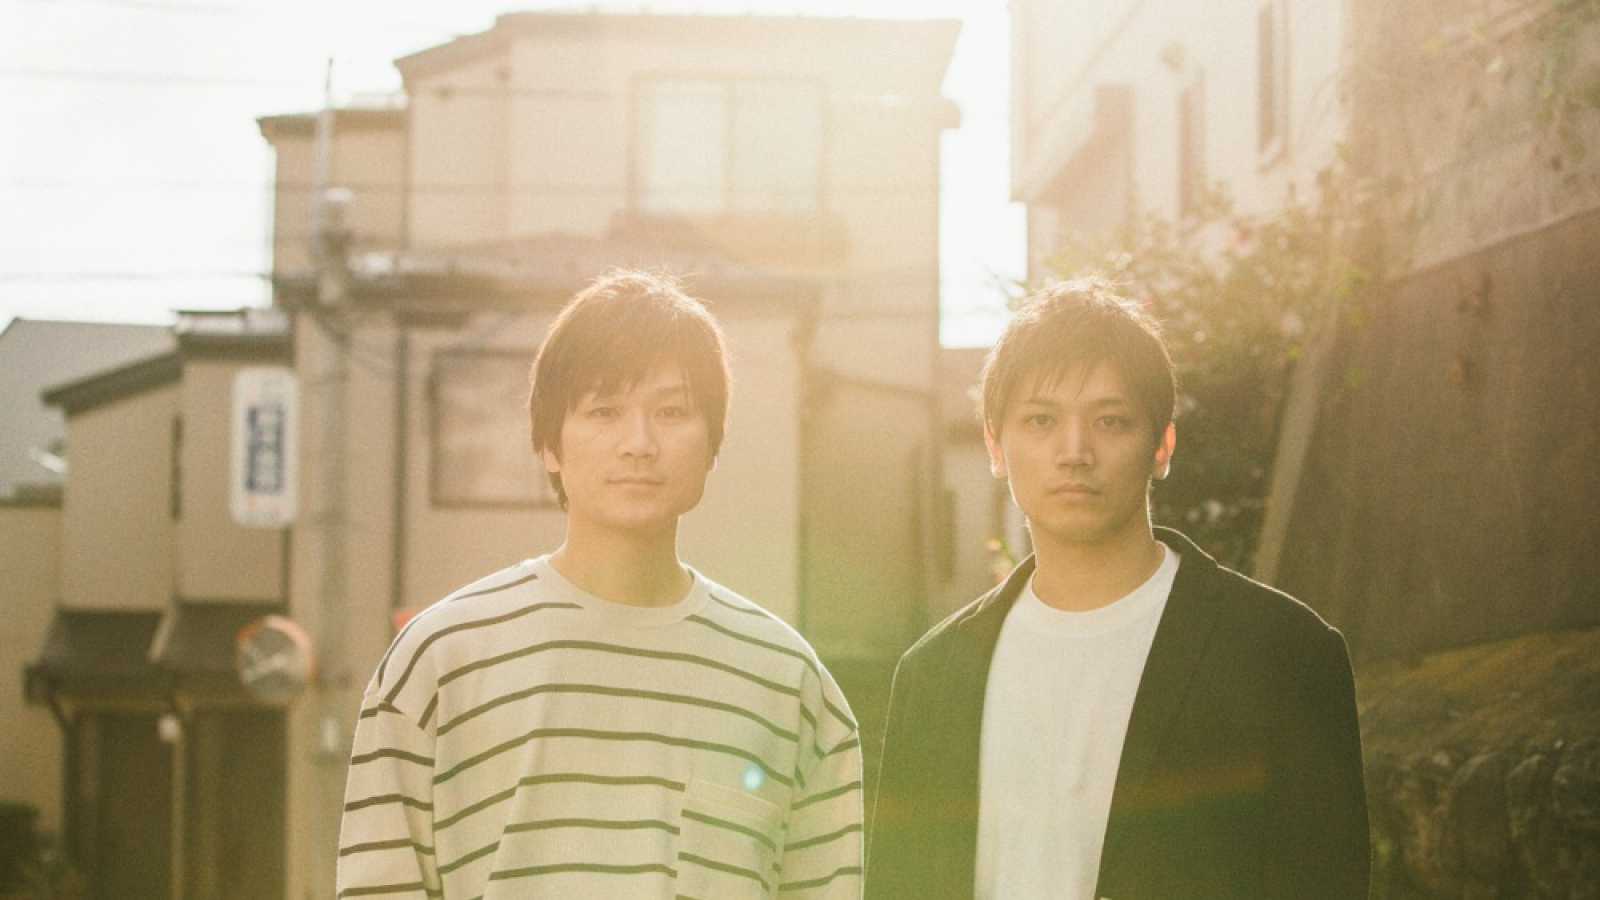 Hirakawachi 1-chome Announce New Album and Live Streaming Concert © Hirakawachi 1-chome. All rights reserved.